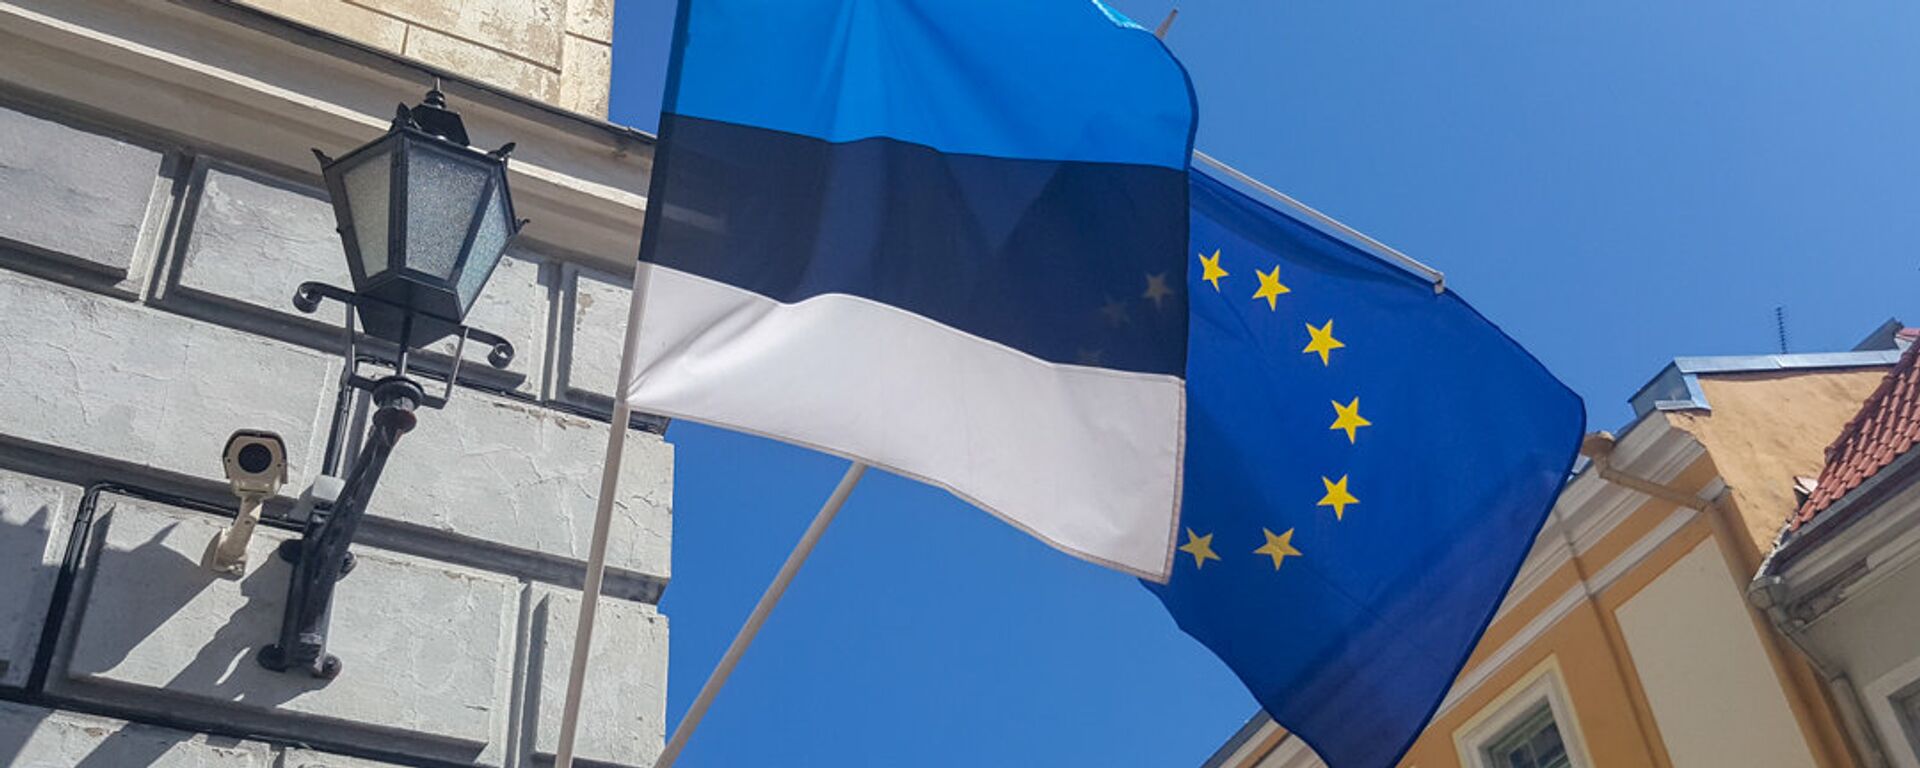 Флаги ЕС и Эстонии - Sputnik Latvija, 1920, 08.02.2021